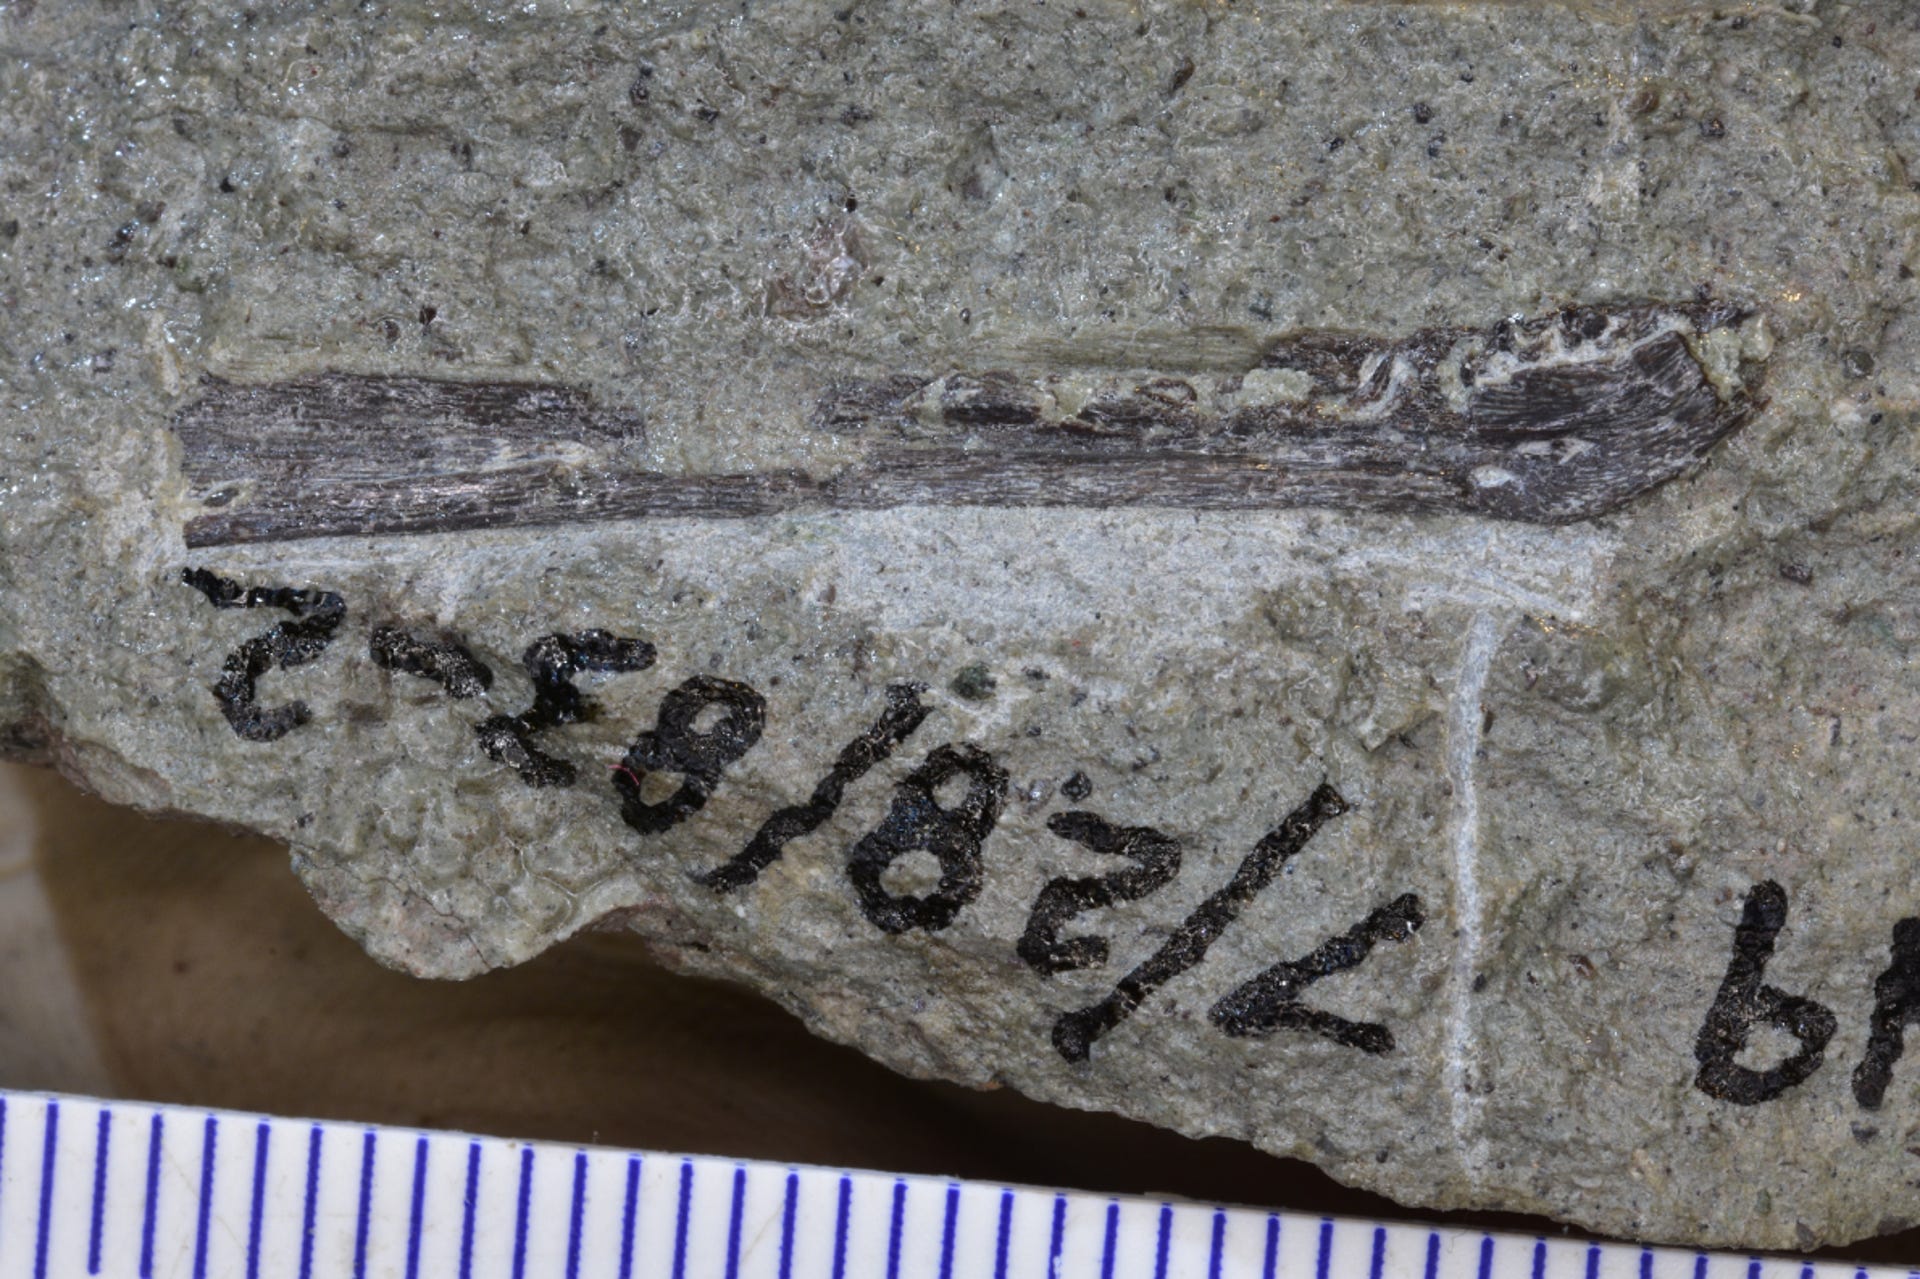 tyrannosaurjawbone-fossil-0.png